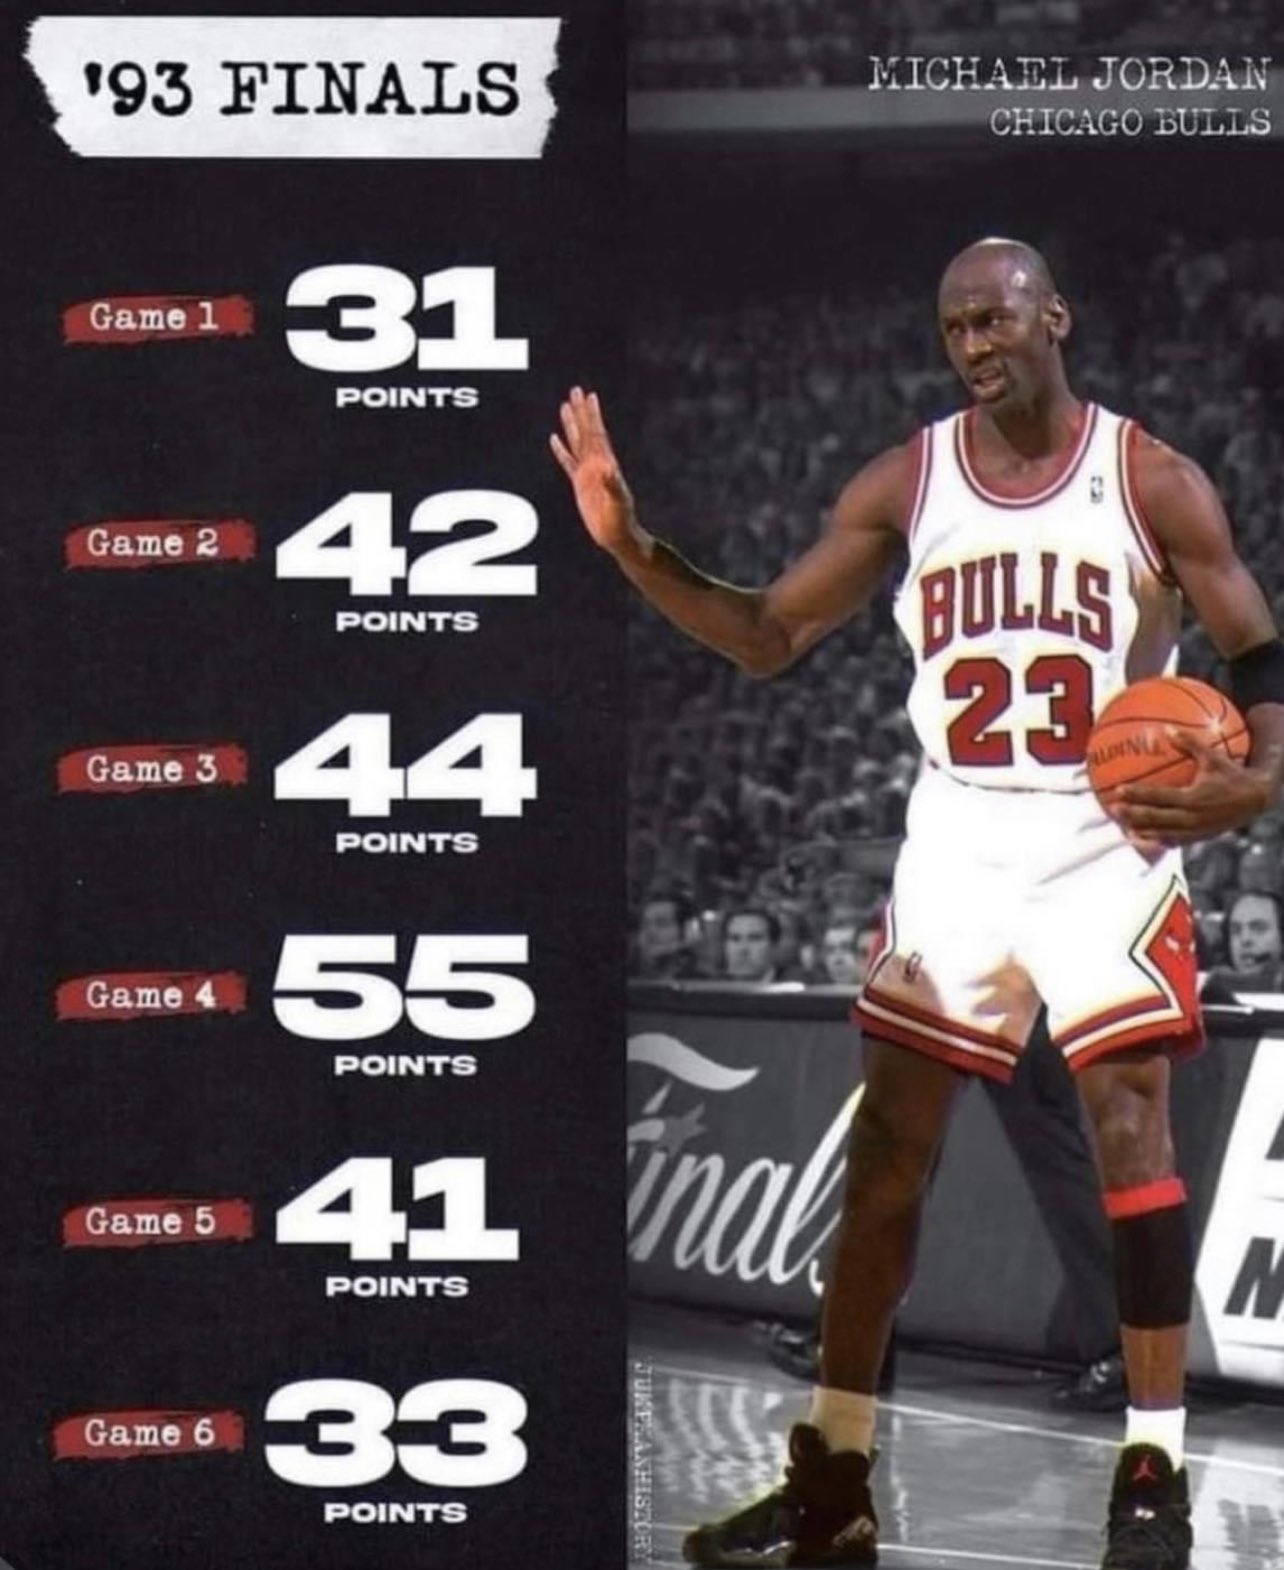 Die-Hard Chicago Bulls Fans on Twitter: points per in an #NBAFinals series: 1) 1993 Michael Jordan 41.0 PPG 2) 1967 Rick Barry 40.8 PPG 3) 1962 Elgin Baylor 40.6 PPG